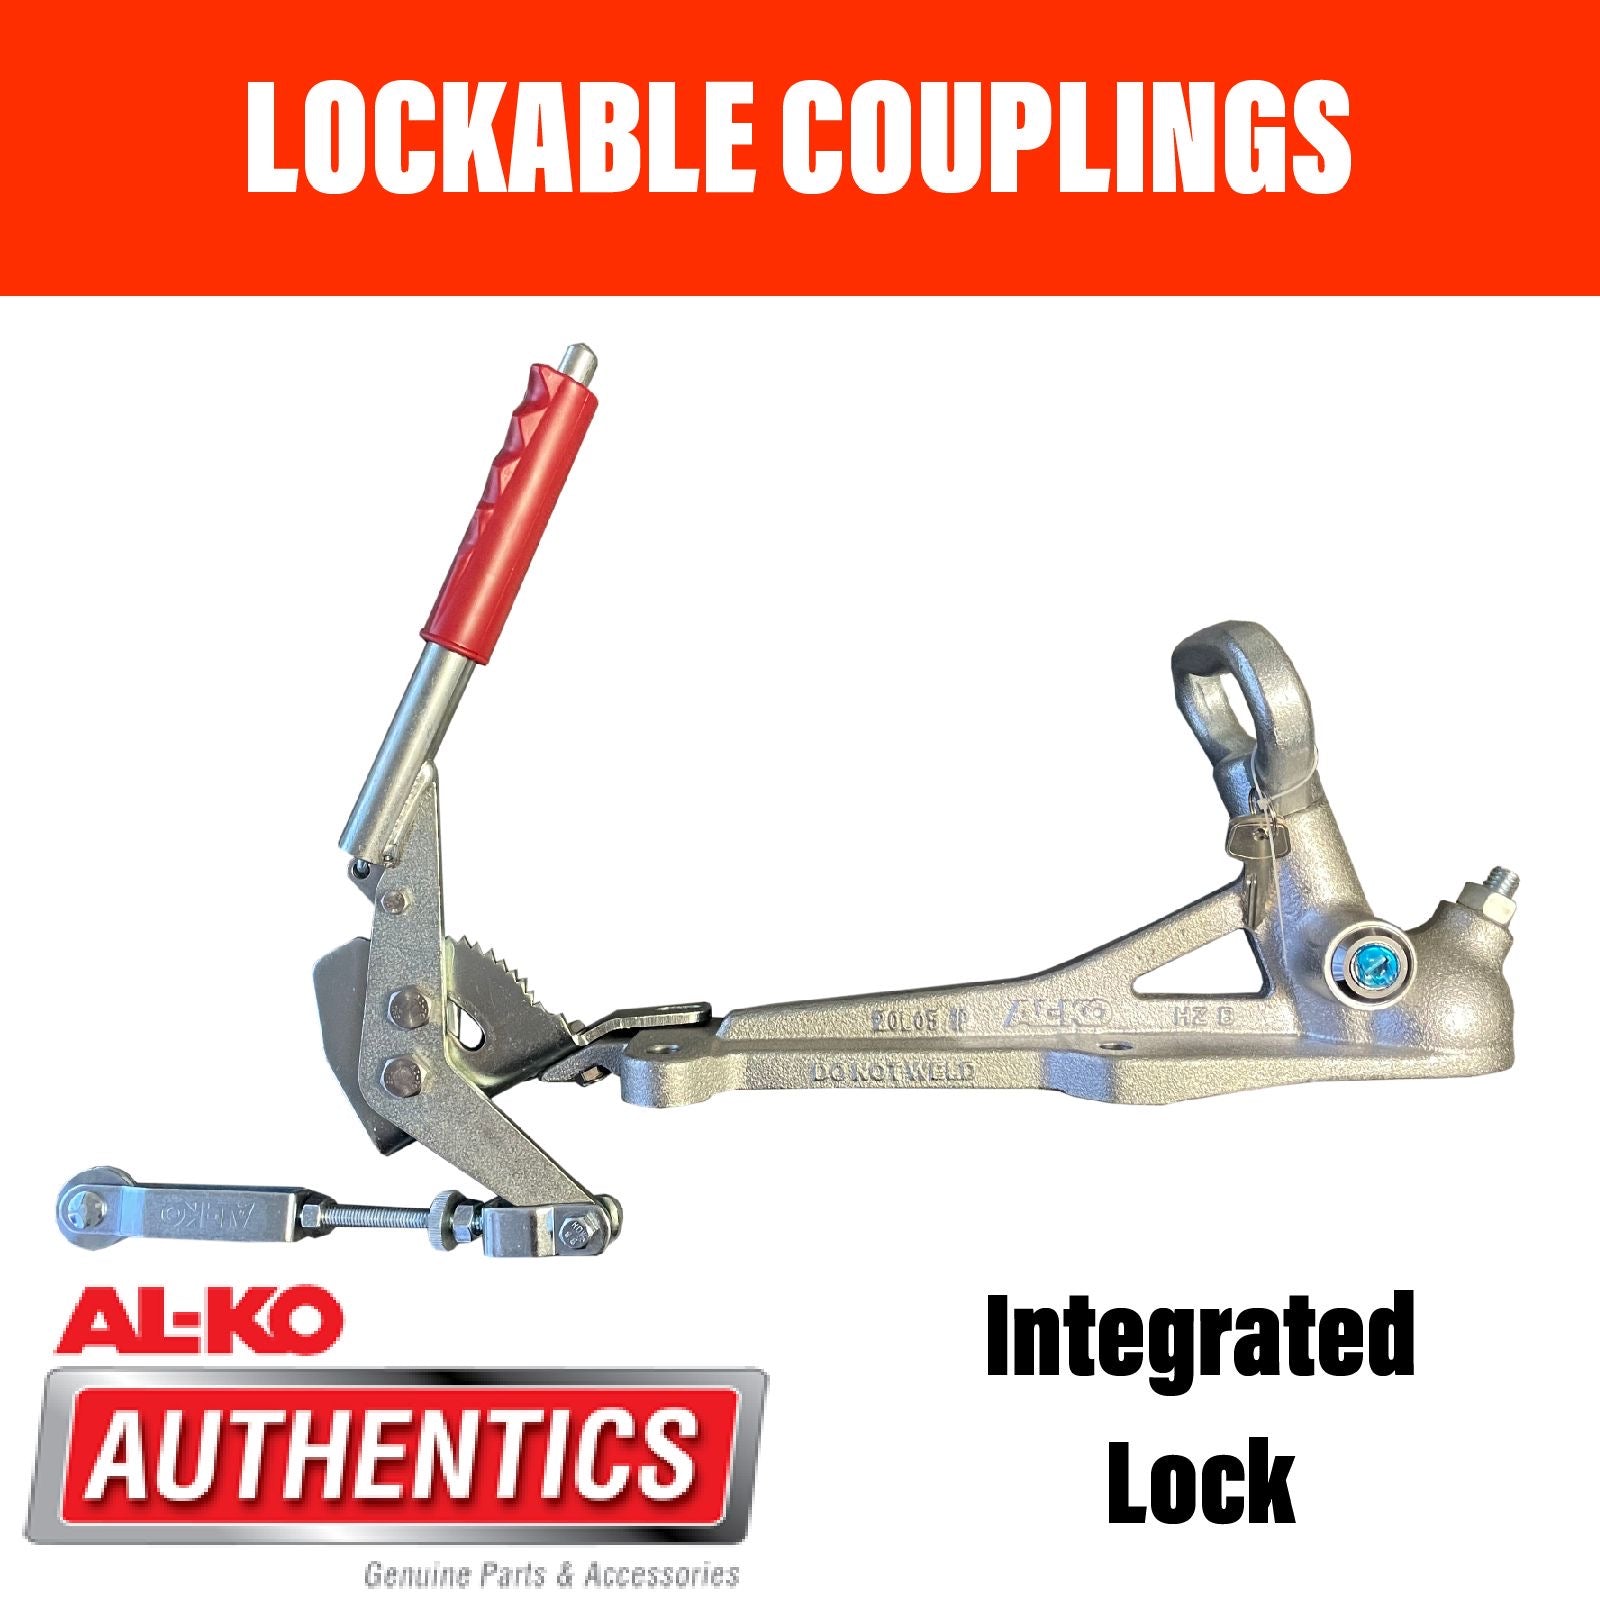 AL-KO 3500KG Lockable Coupling with Premium Handbrake